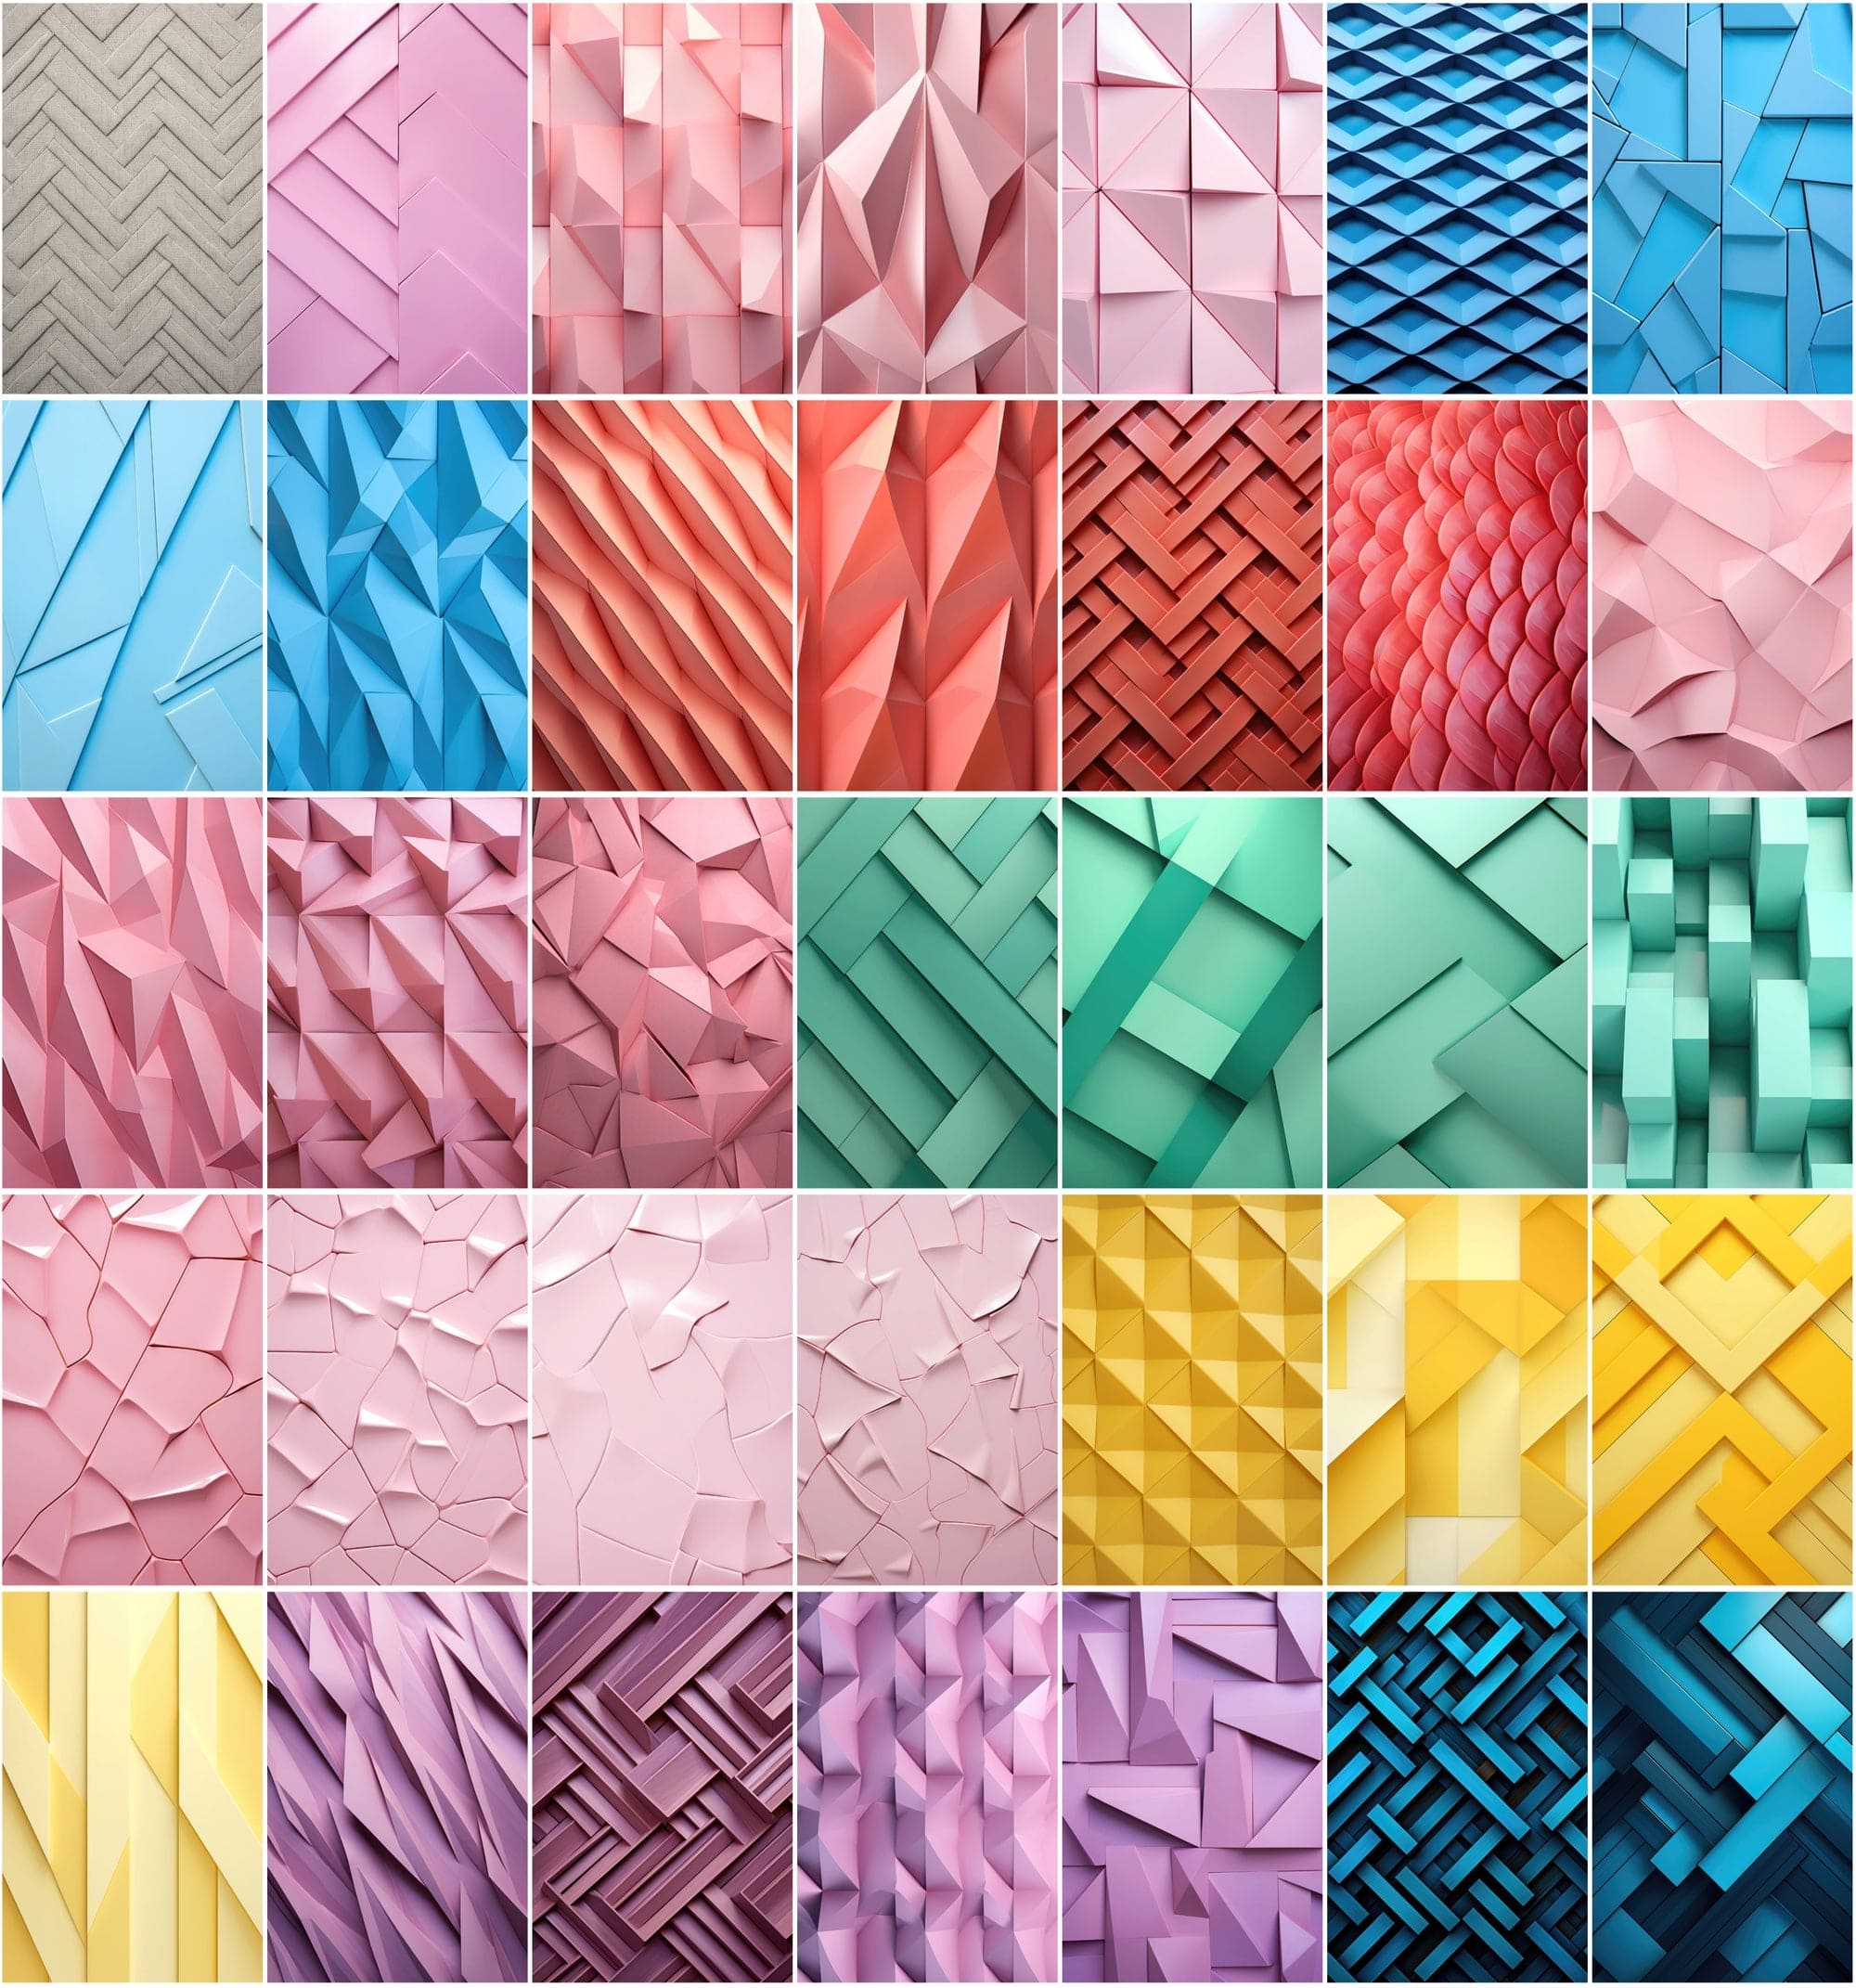 Futuristic 420 JPG Backgrounds Bundle with Commercial License, Colorful Square Images Digital Download Sumobundle